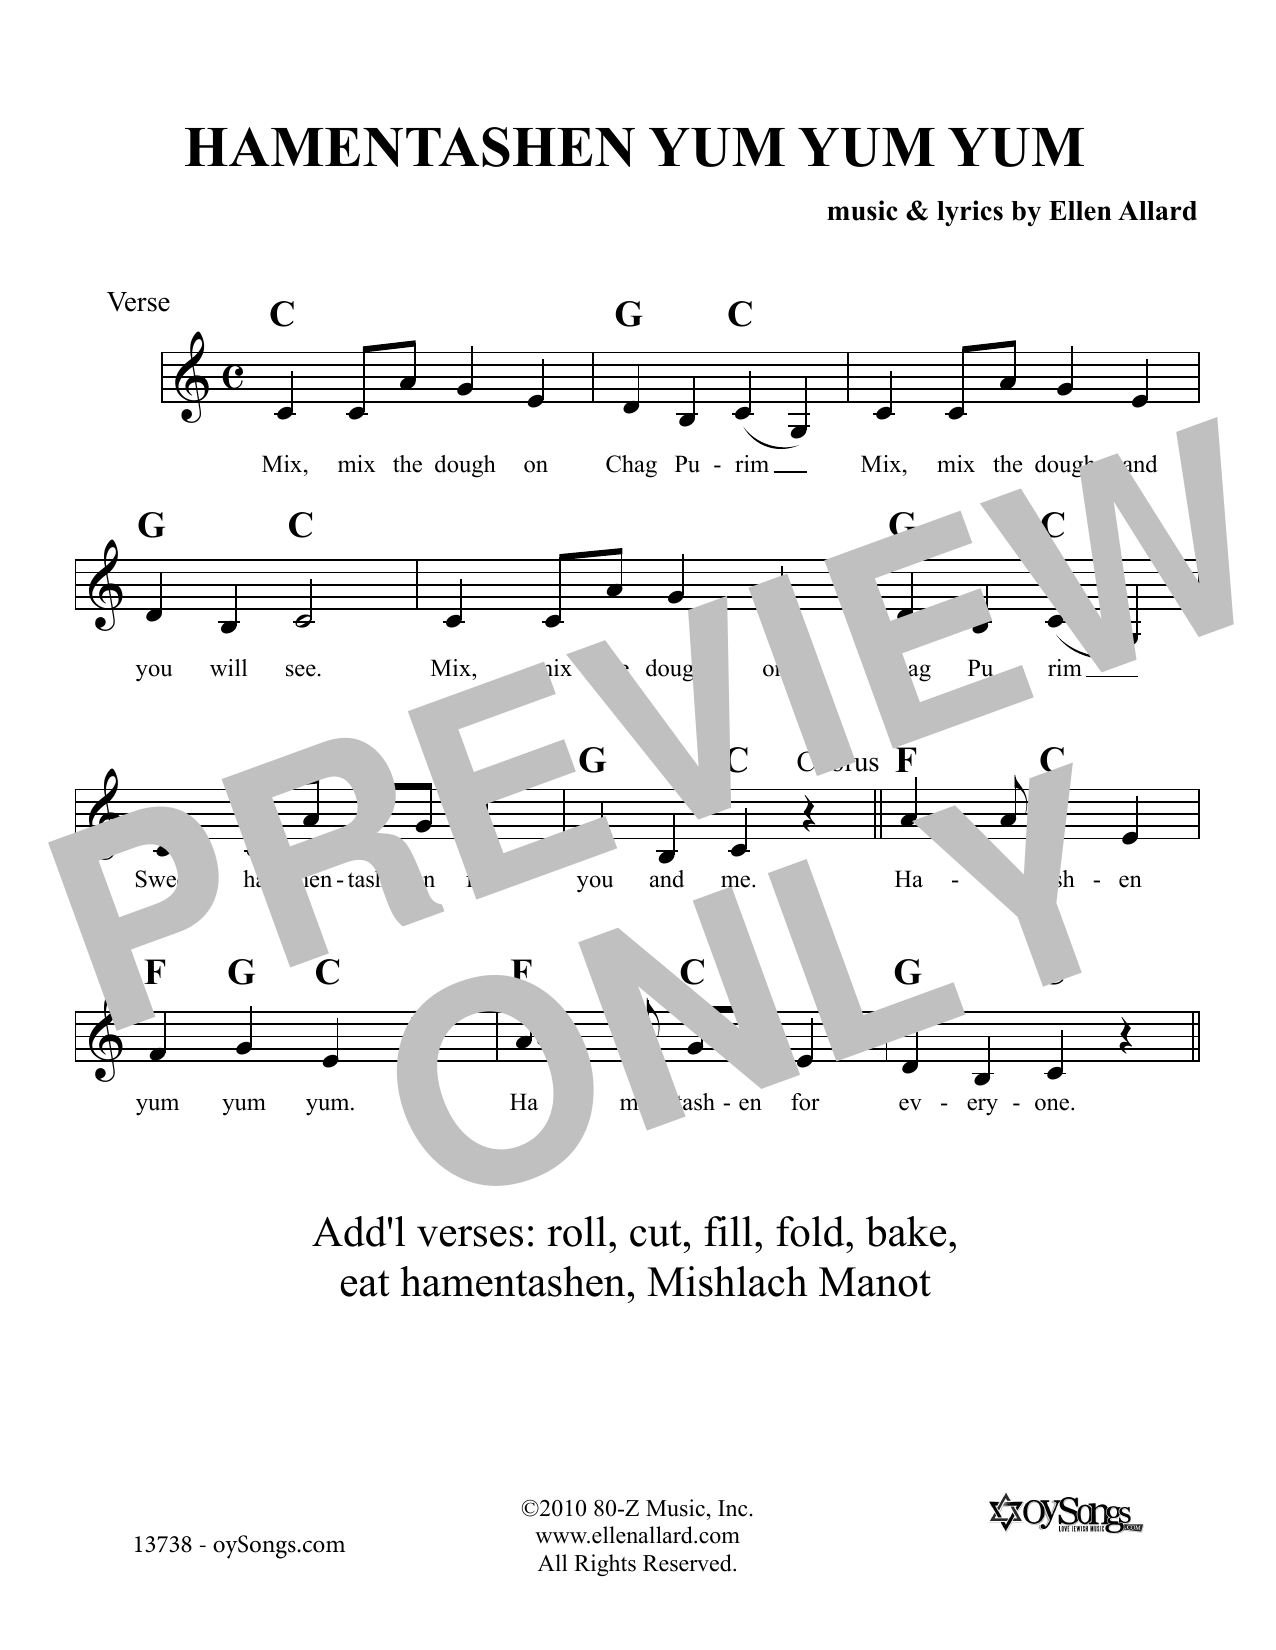 Download Ellen Allard Hamentashen Yum Yum Yum Sheet Music and learn how to play Melody Line, Lyrics & Chords PDF digital score in minutes